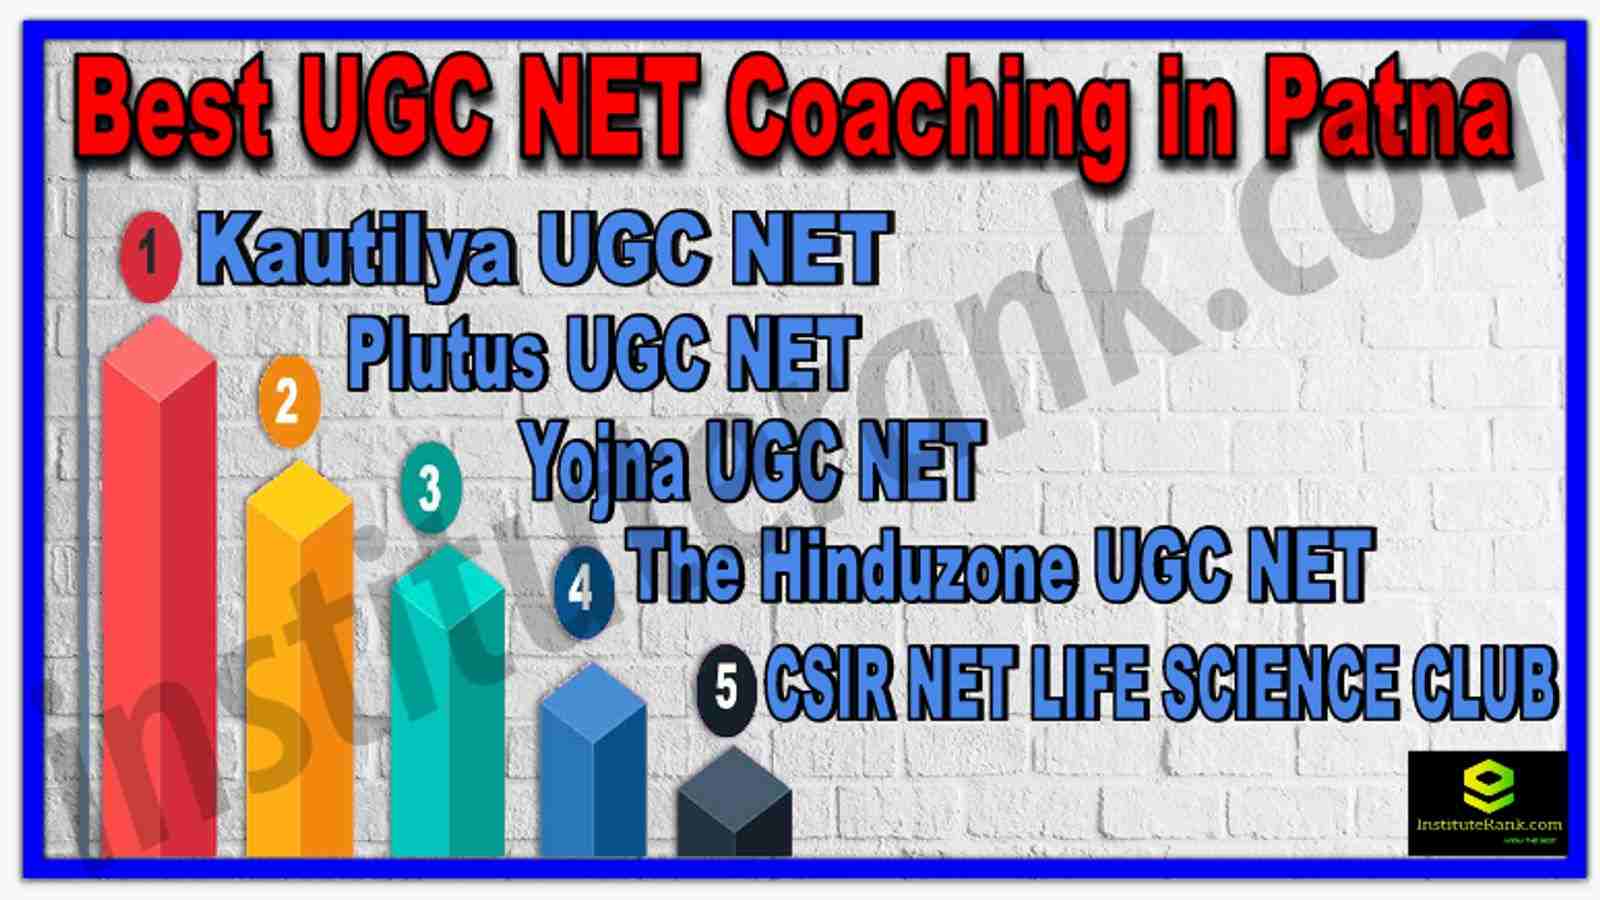 Best 10 UGC NET Coaching in Patna